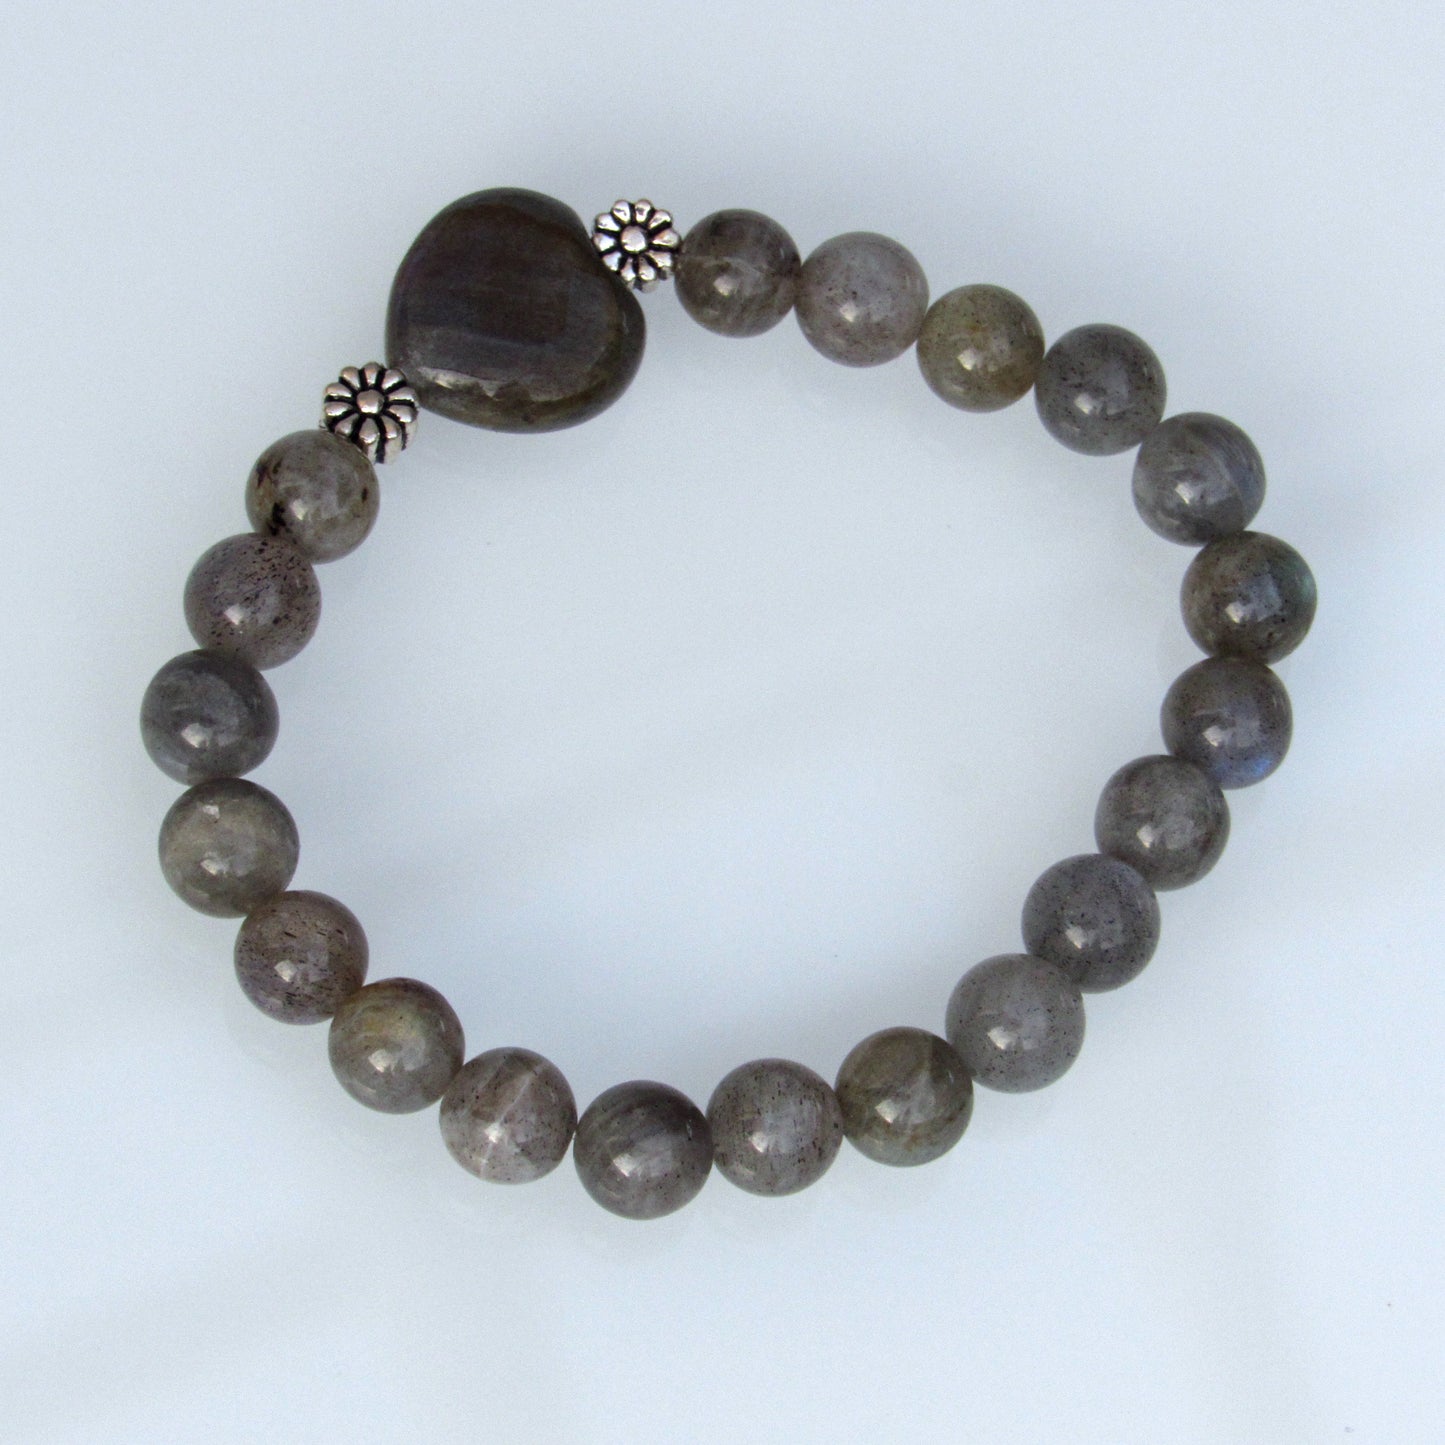 Labradorite gemstone and sterling silver beaded crystal stretch bracelet